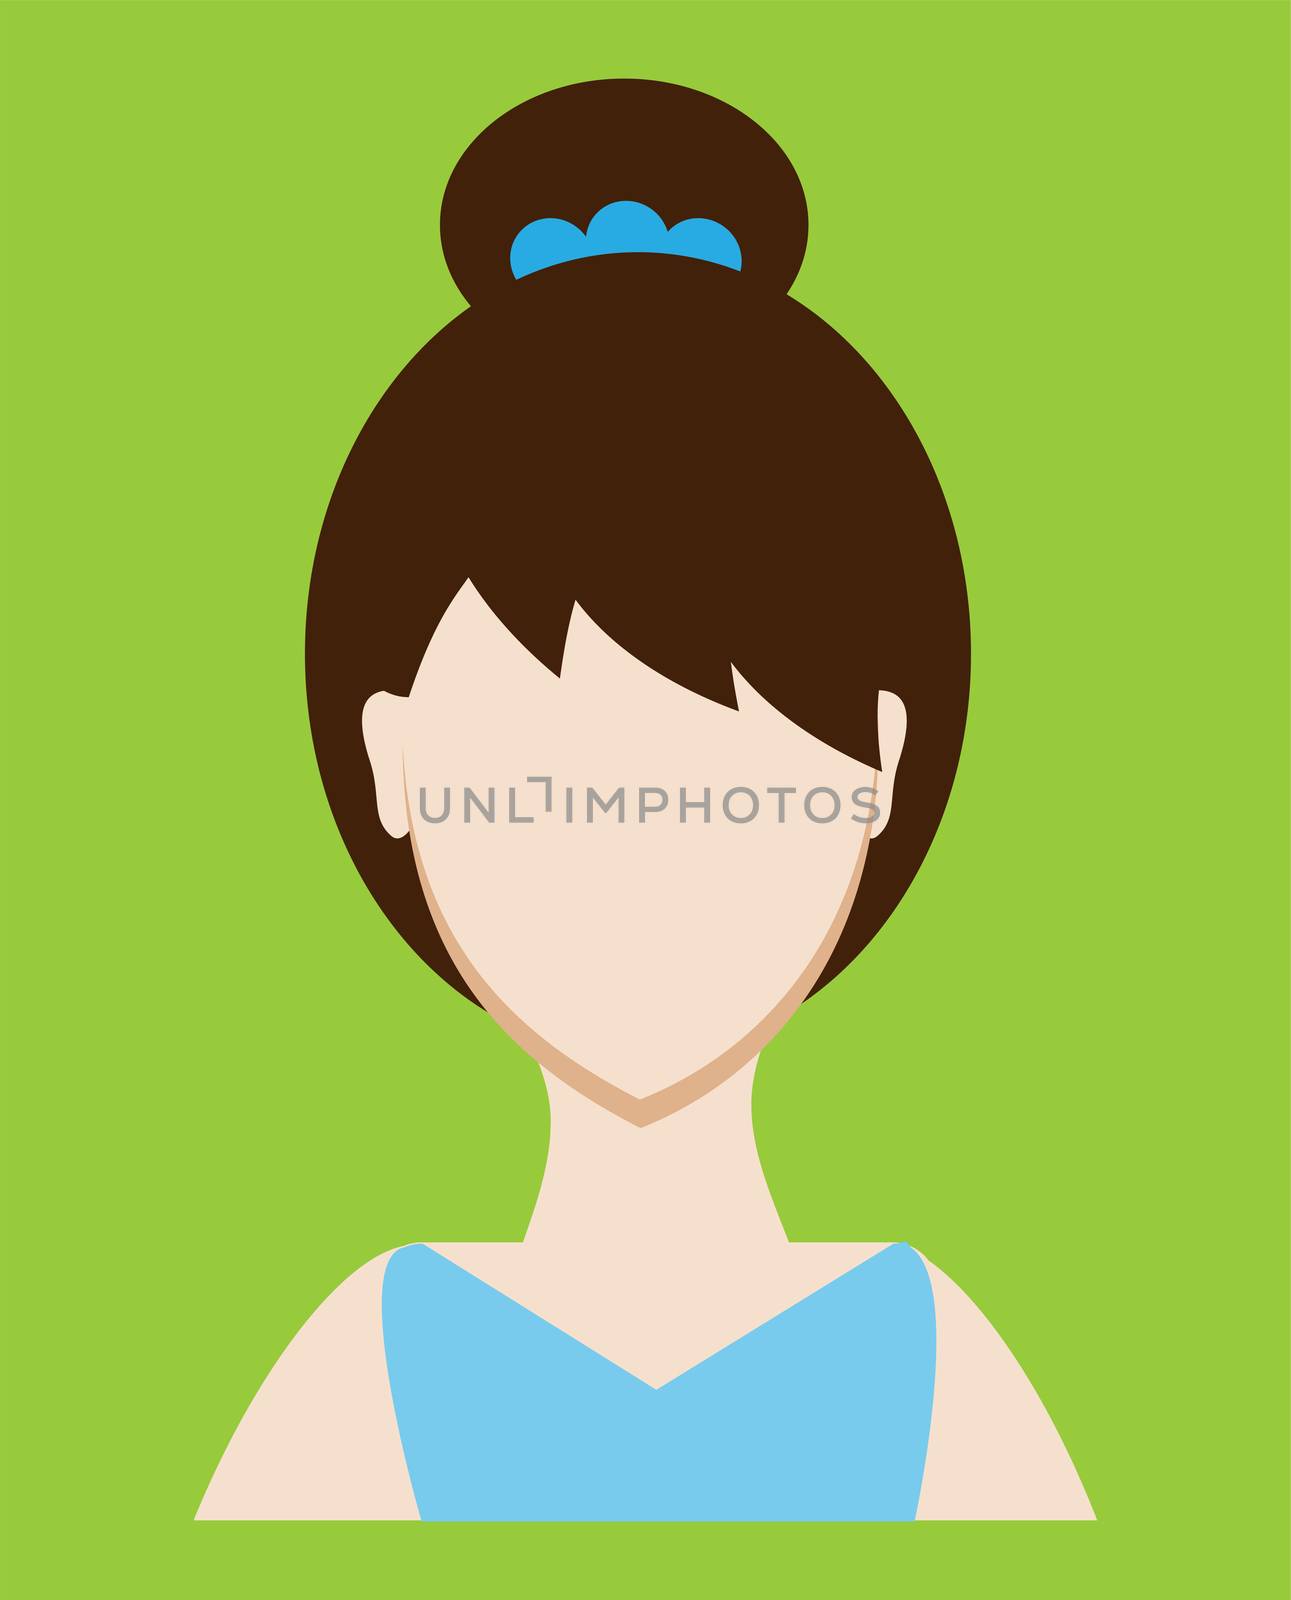 Female avatar or pictogram for social networks. Modern flat colorful style. illustration